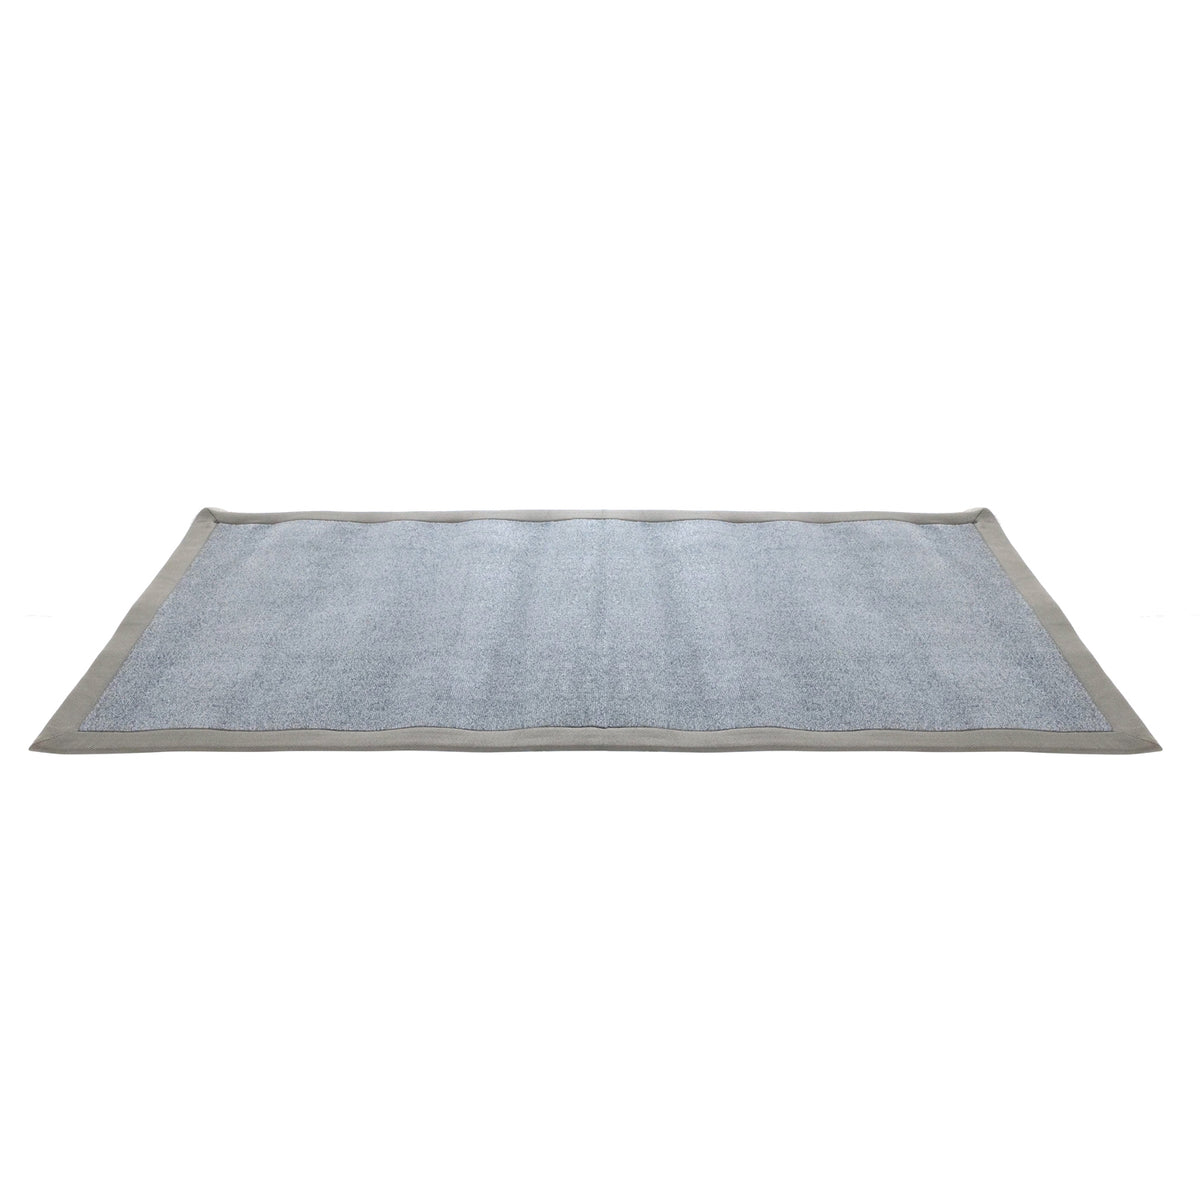 Grey Luxury Soft Bedside Runner / Yoga / Prayer Mat with Cotton Border 80cm x 180cm